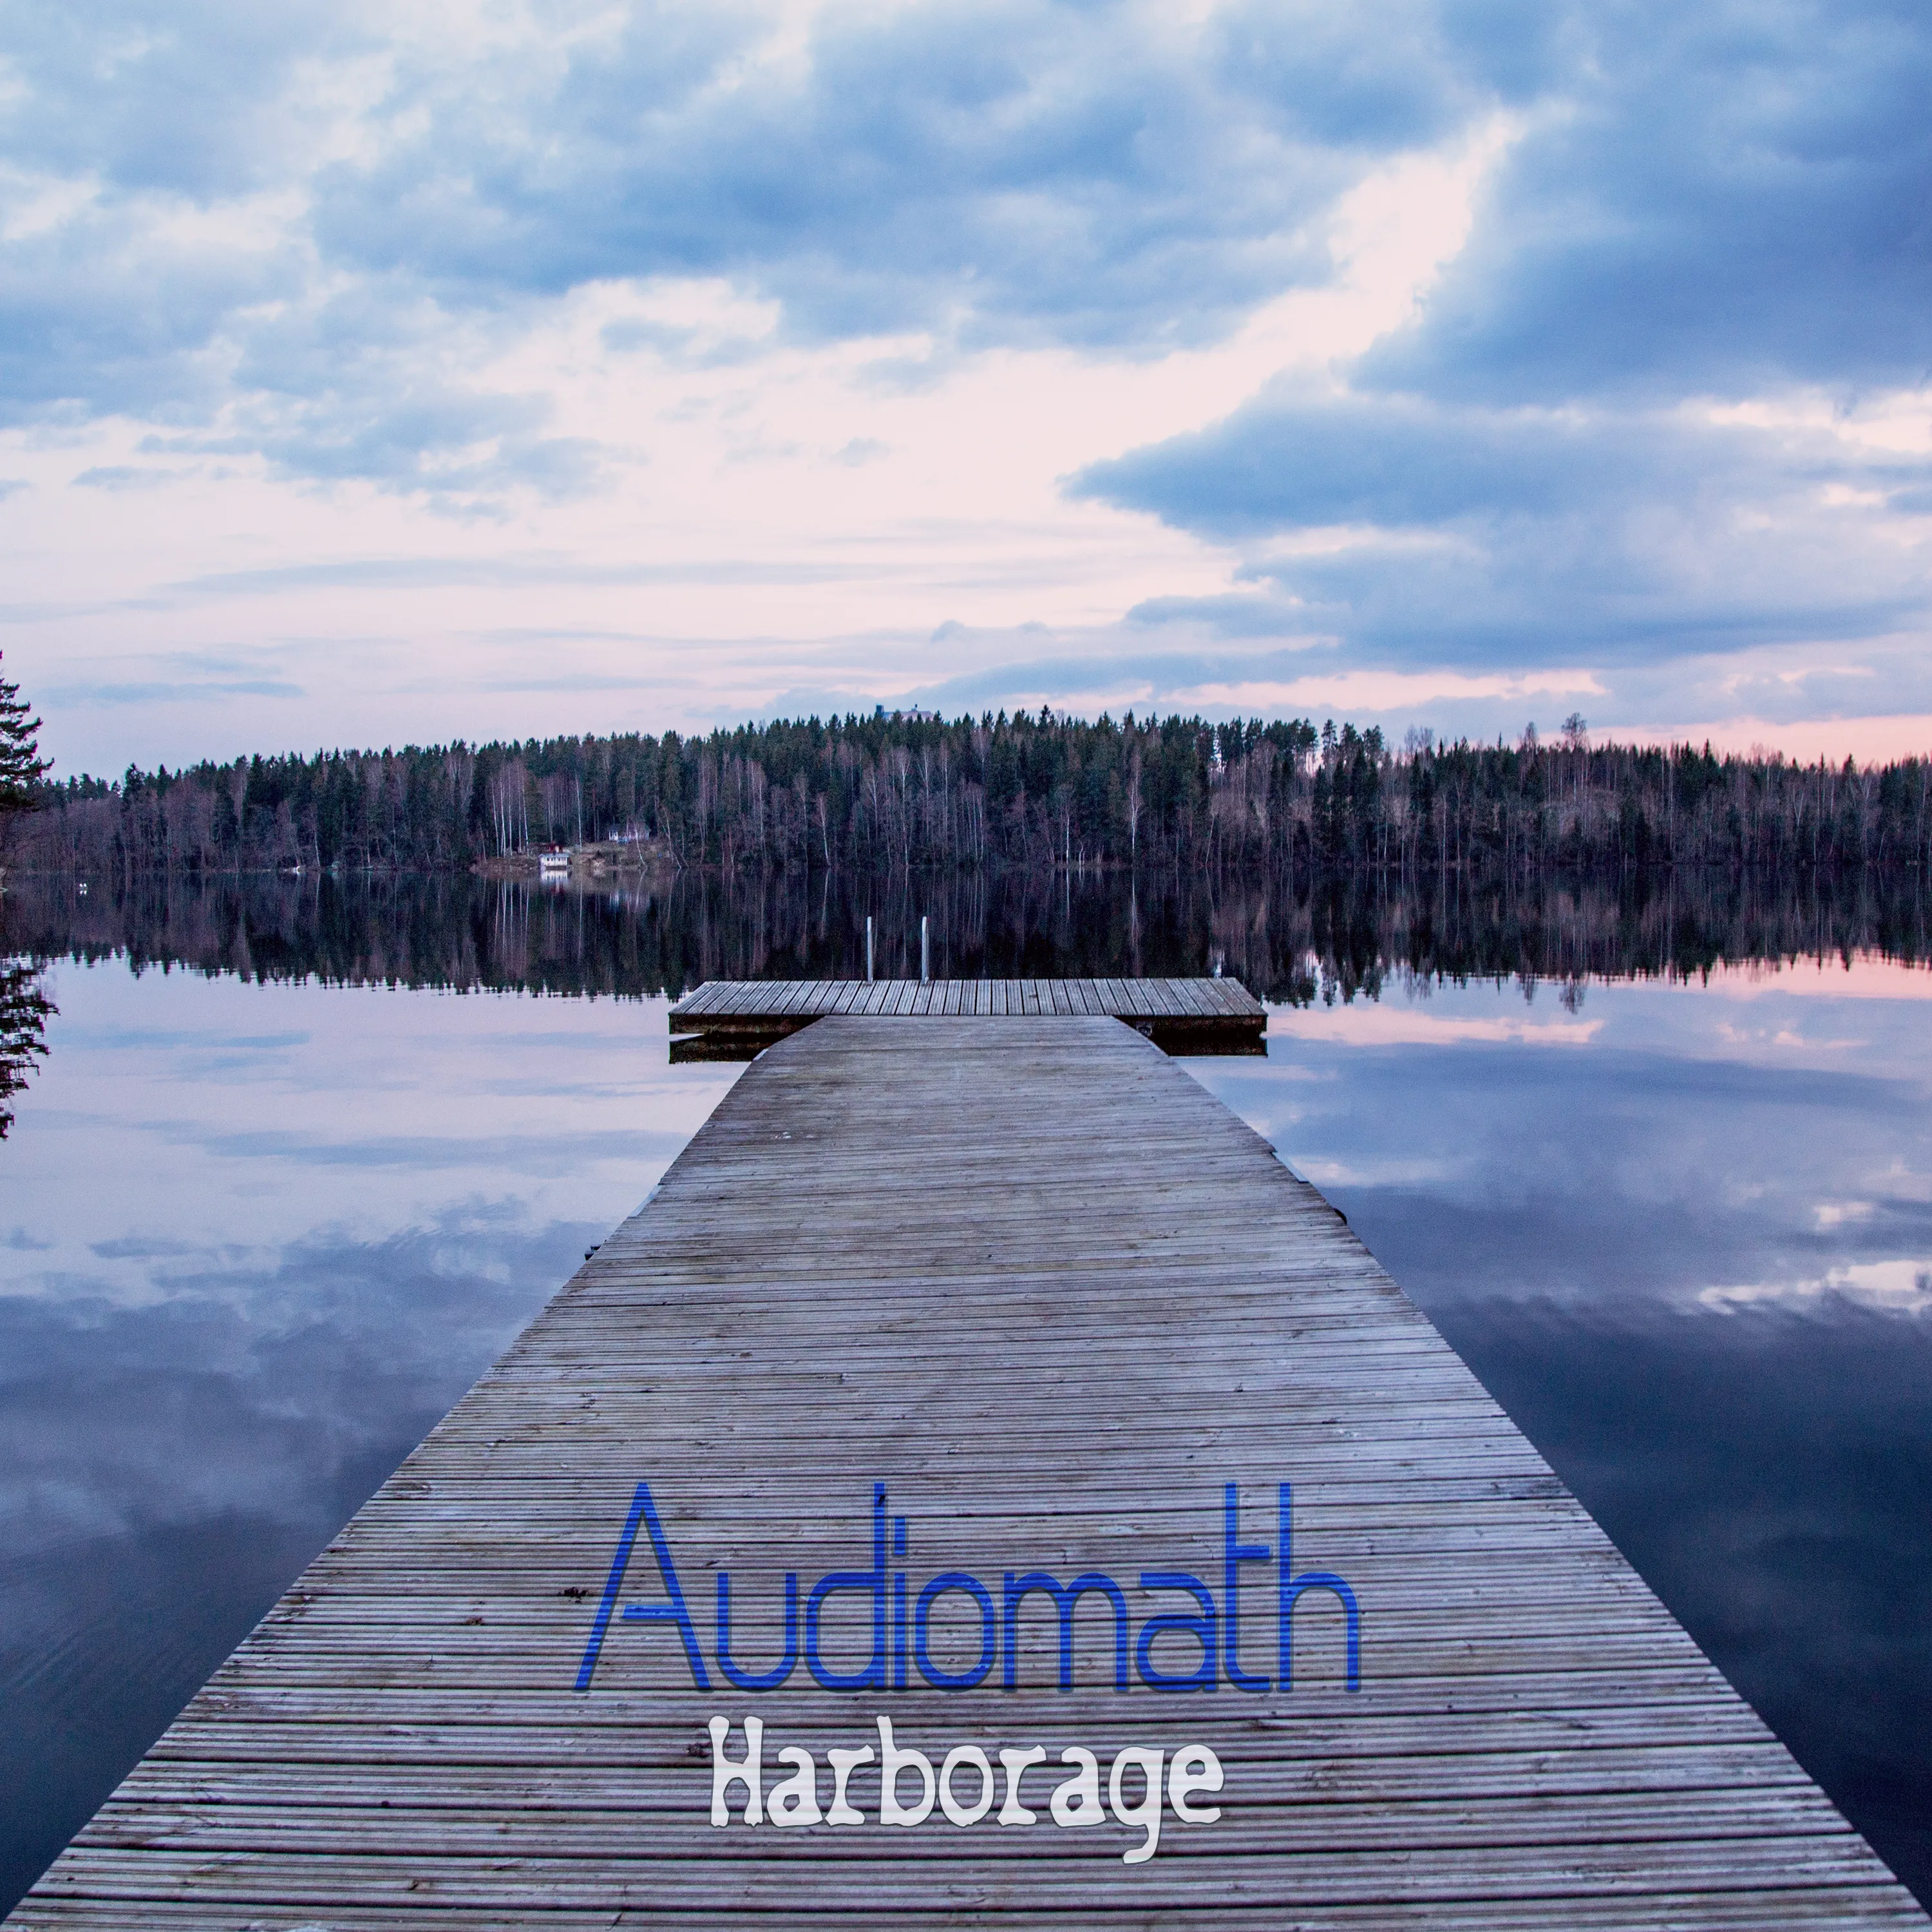 Audiomath_-_Harborage_EP